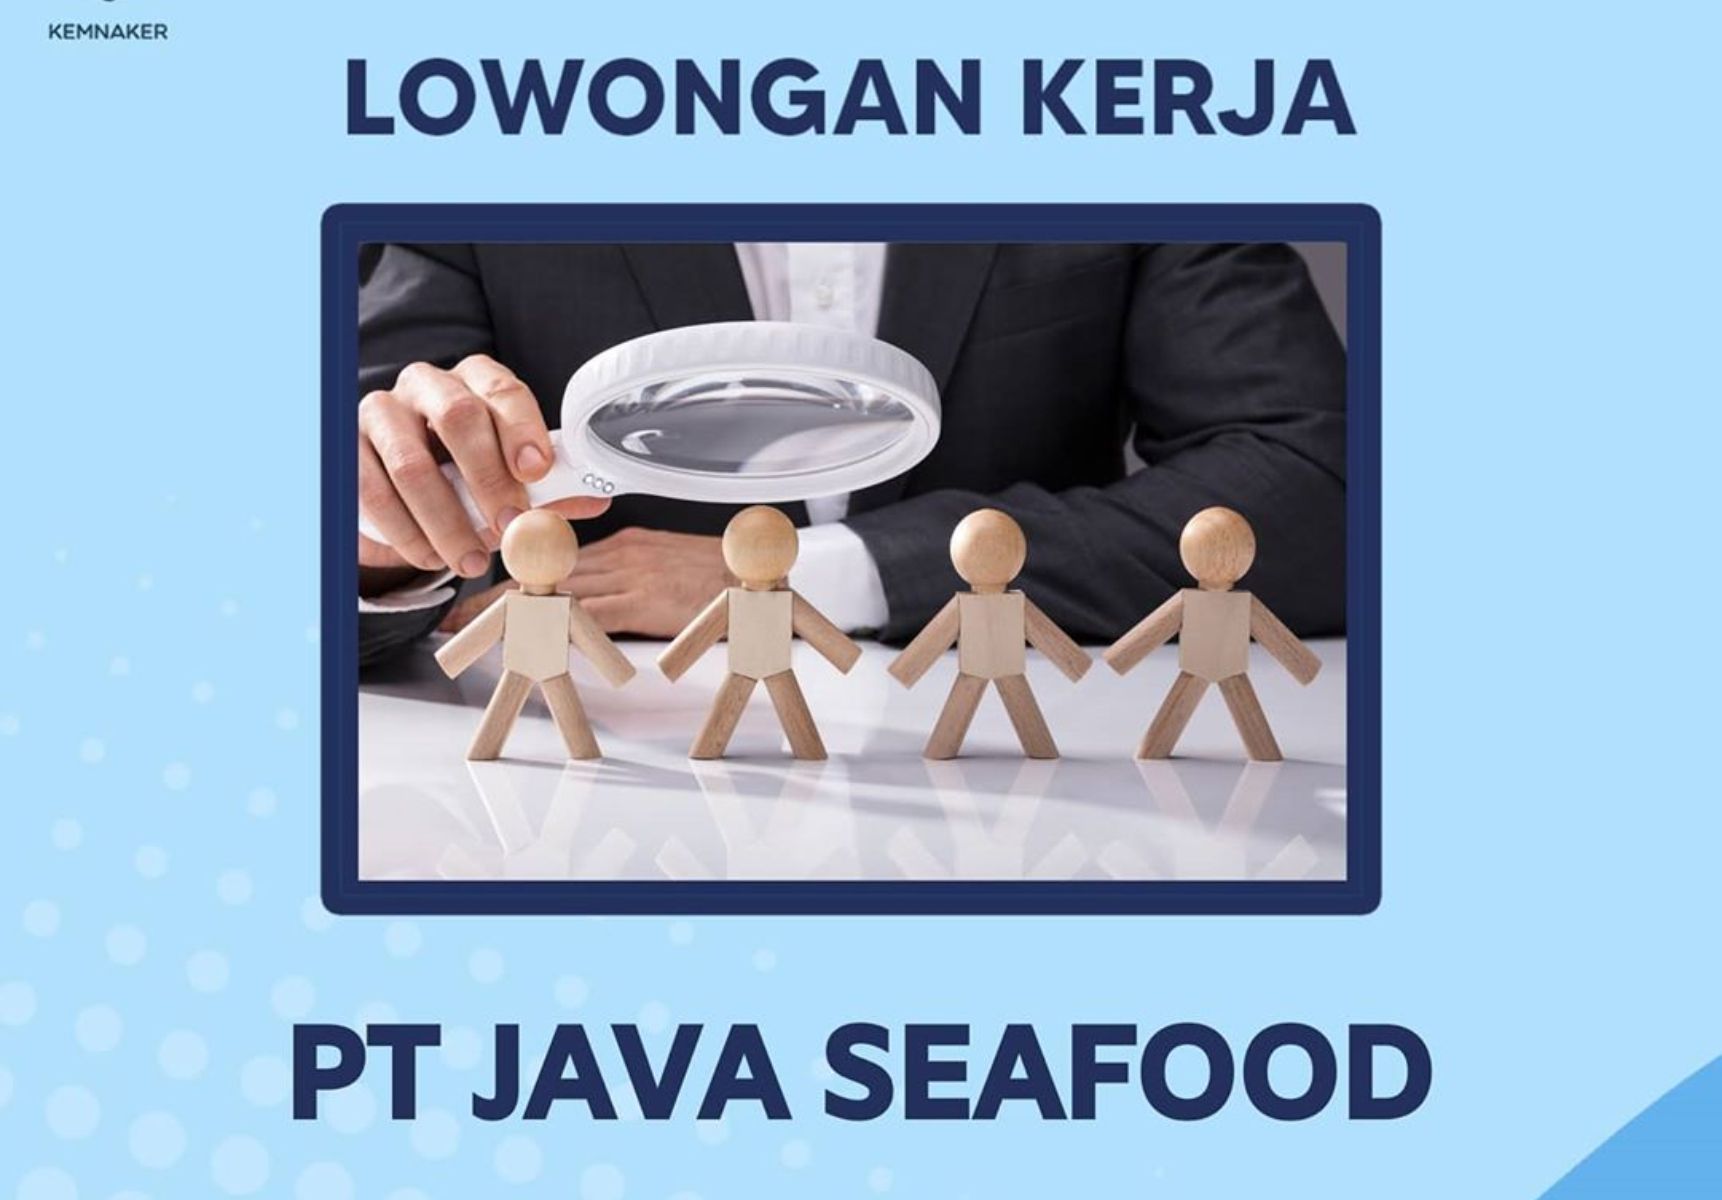 Lowongan Kerja September 2020 Pt Java Seafood Buka 5 Posisi Bagi Lulusan Sma Pikiran Rakyat Com